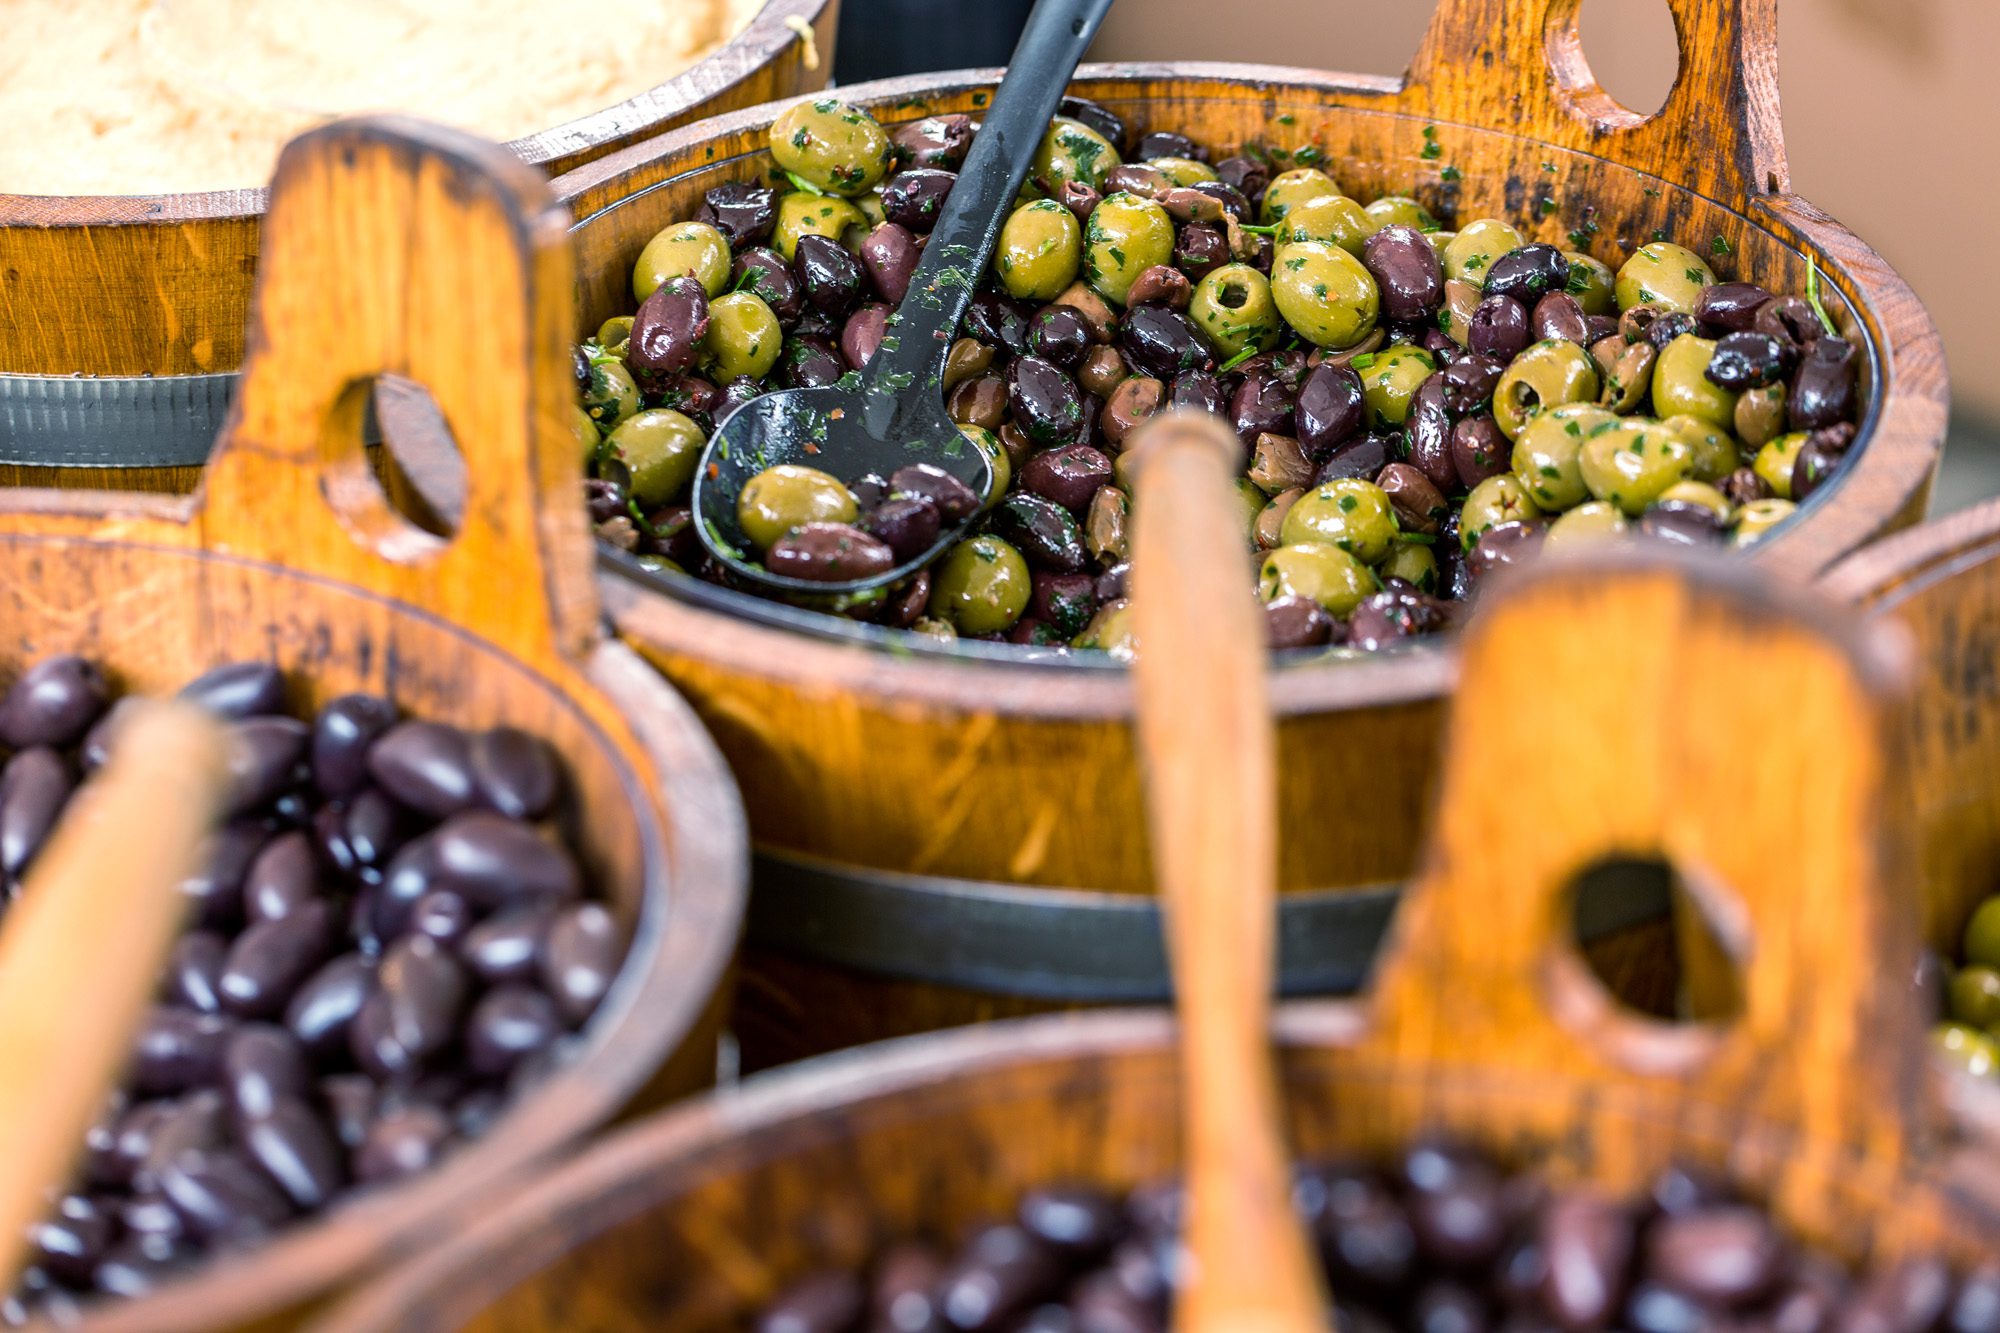 Olives & More - Zuidermrkt